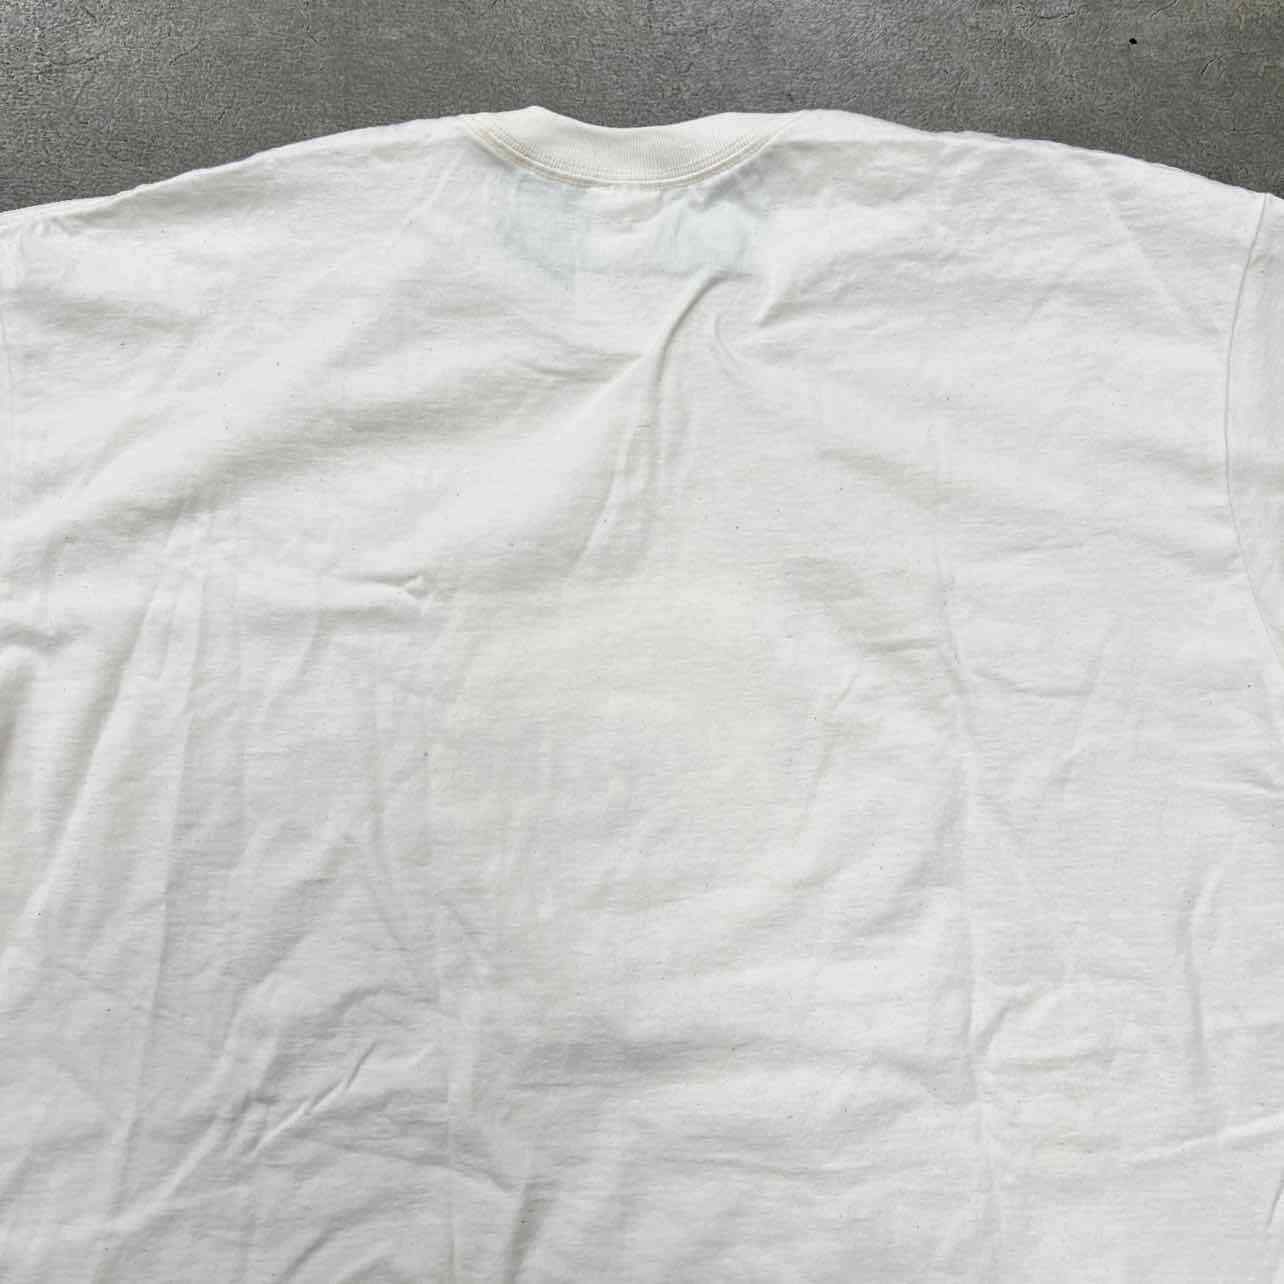 Supreme T-Shirt "NATURAL" - Size 2XL (8105-2) - image 7